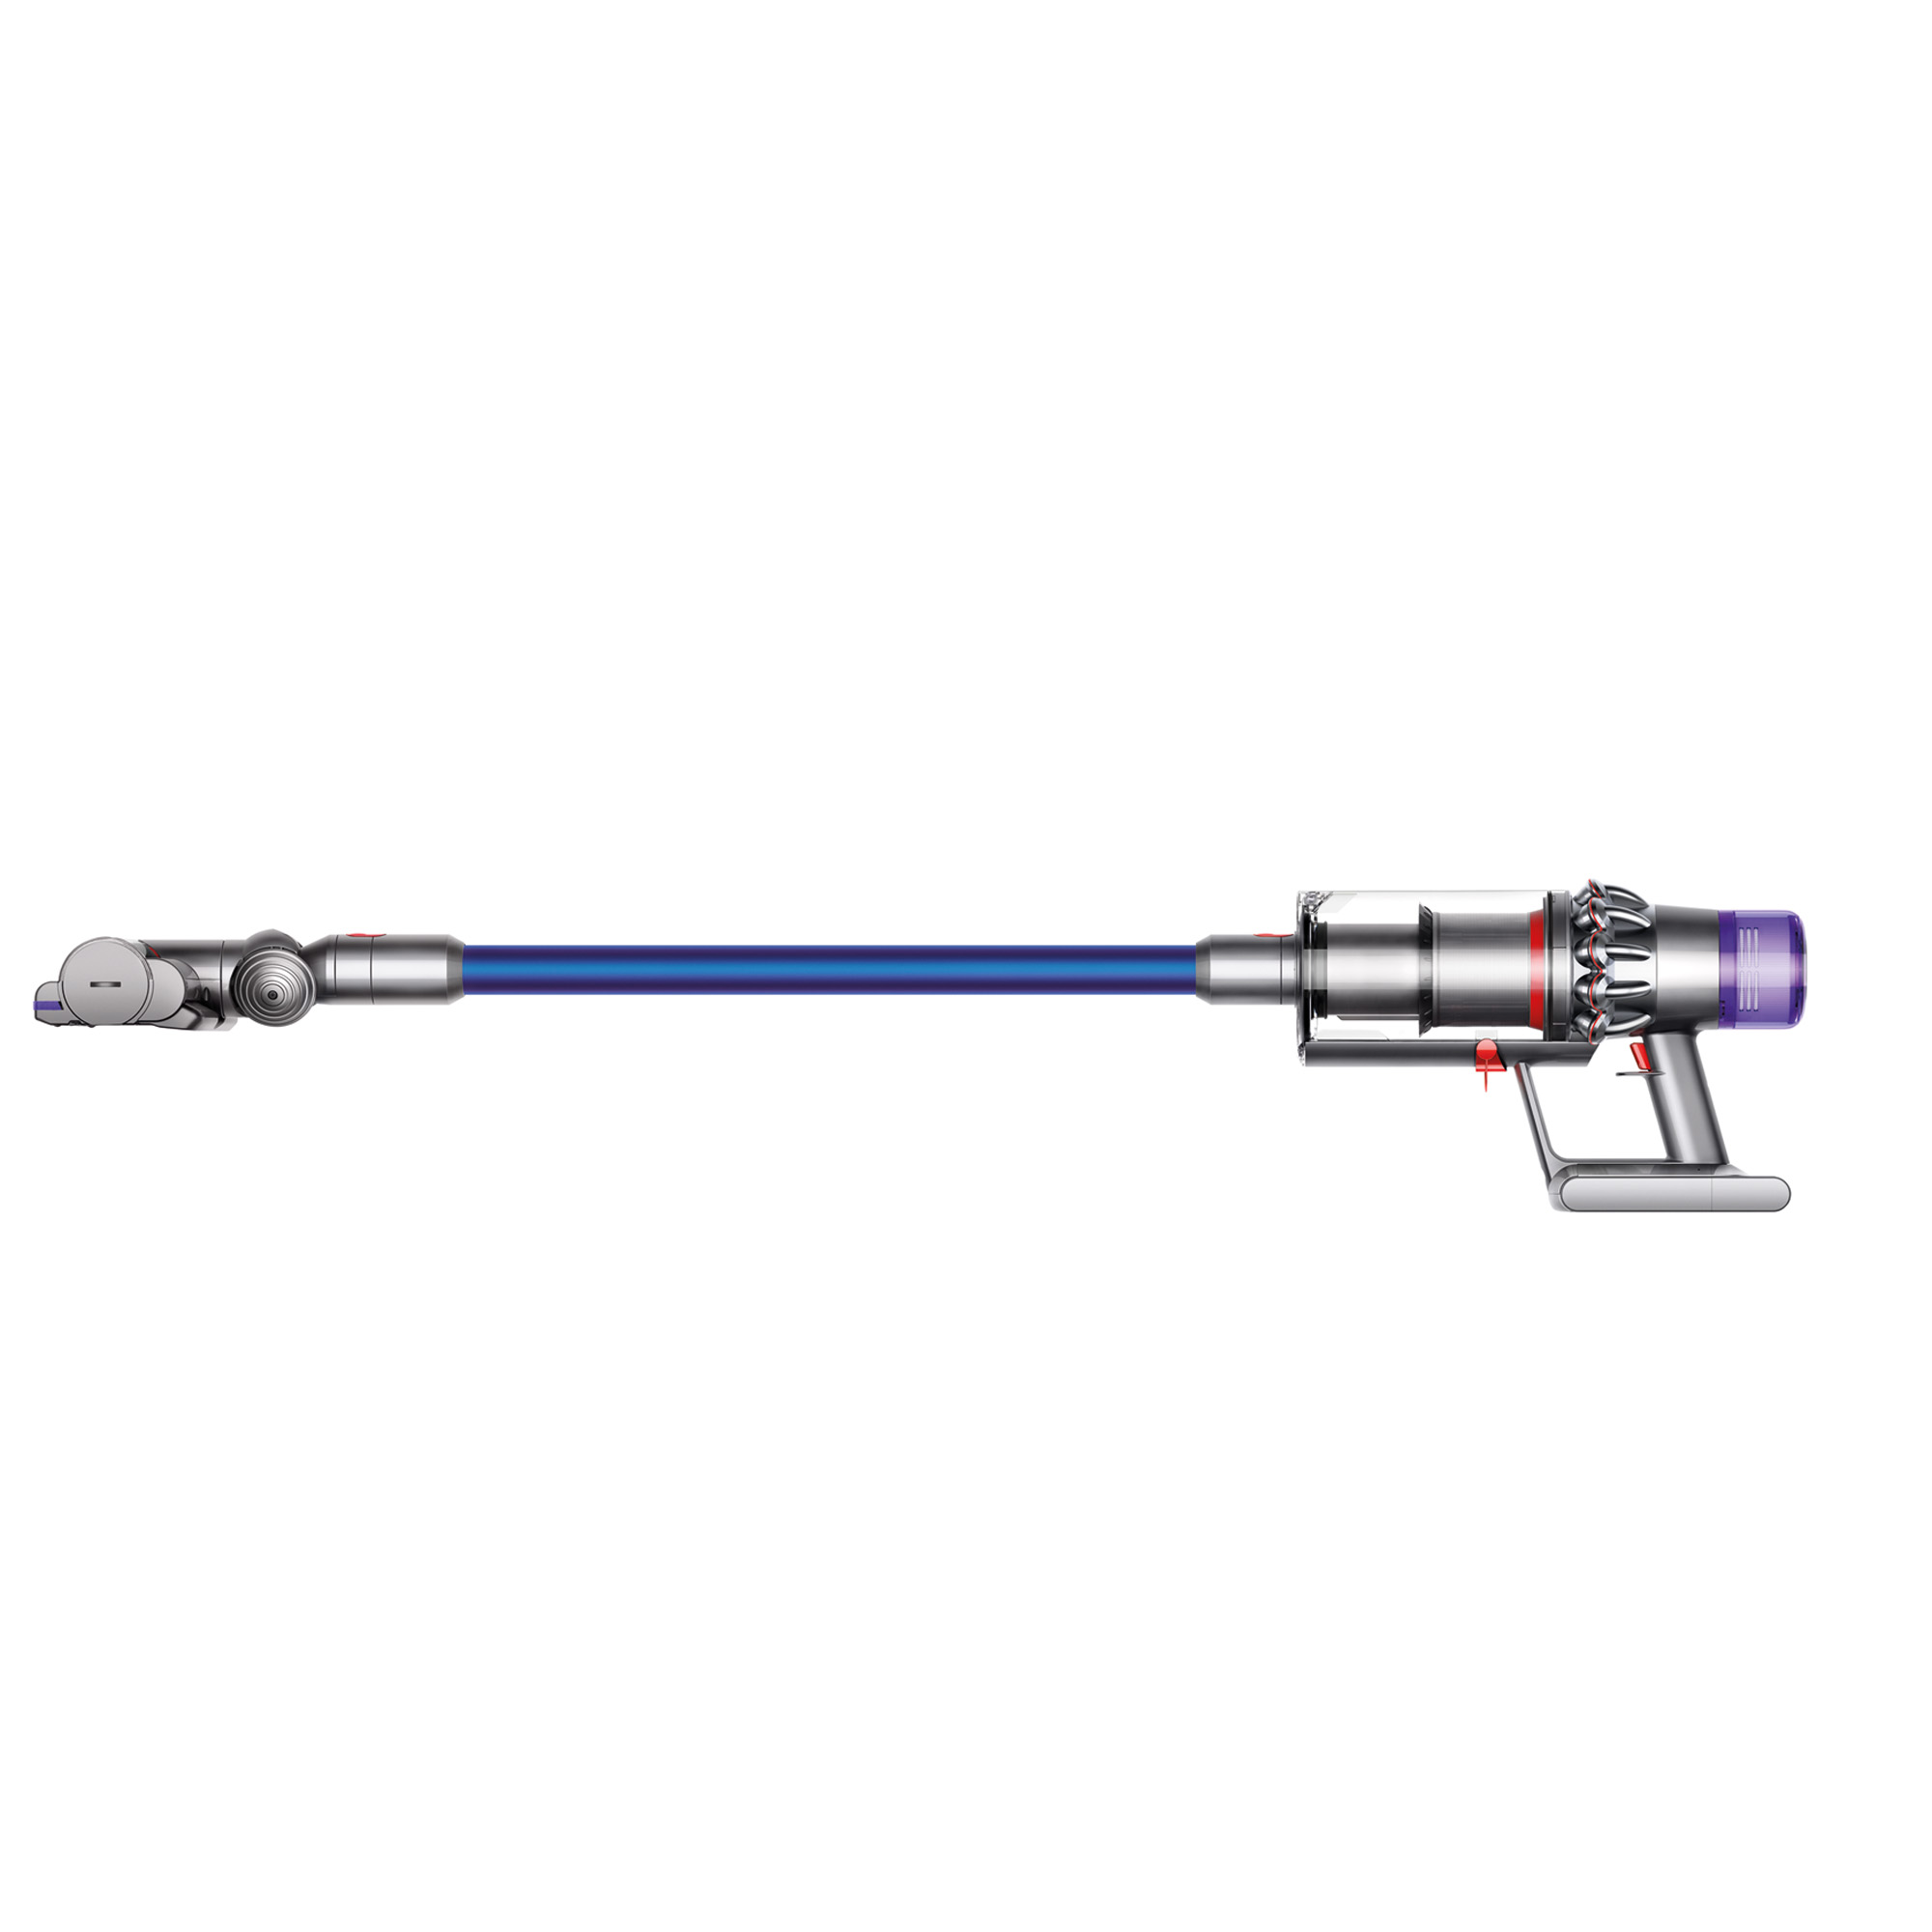 Dyson V11 Torque Drive Cordless Vacuum | Blue | Refurbished - image 2 of 7